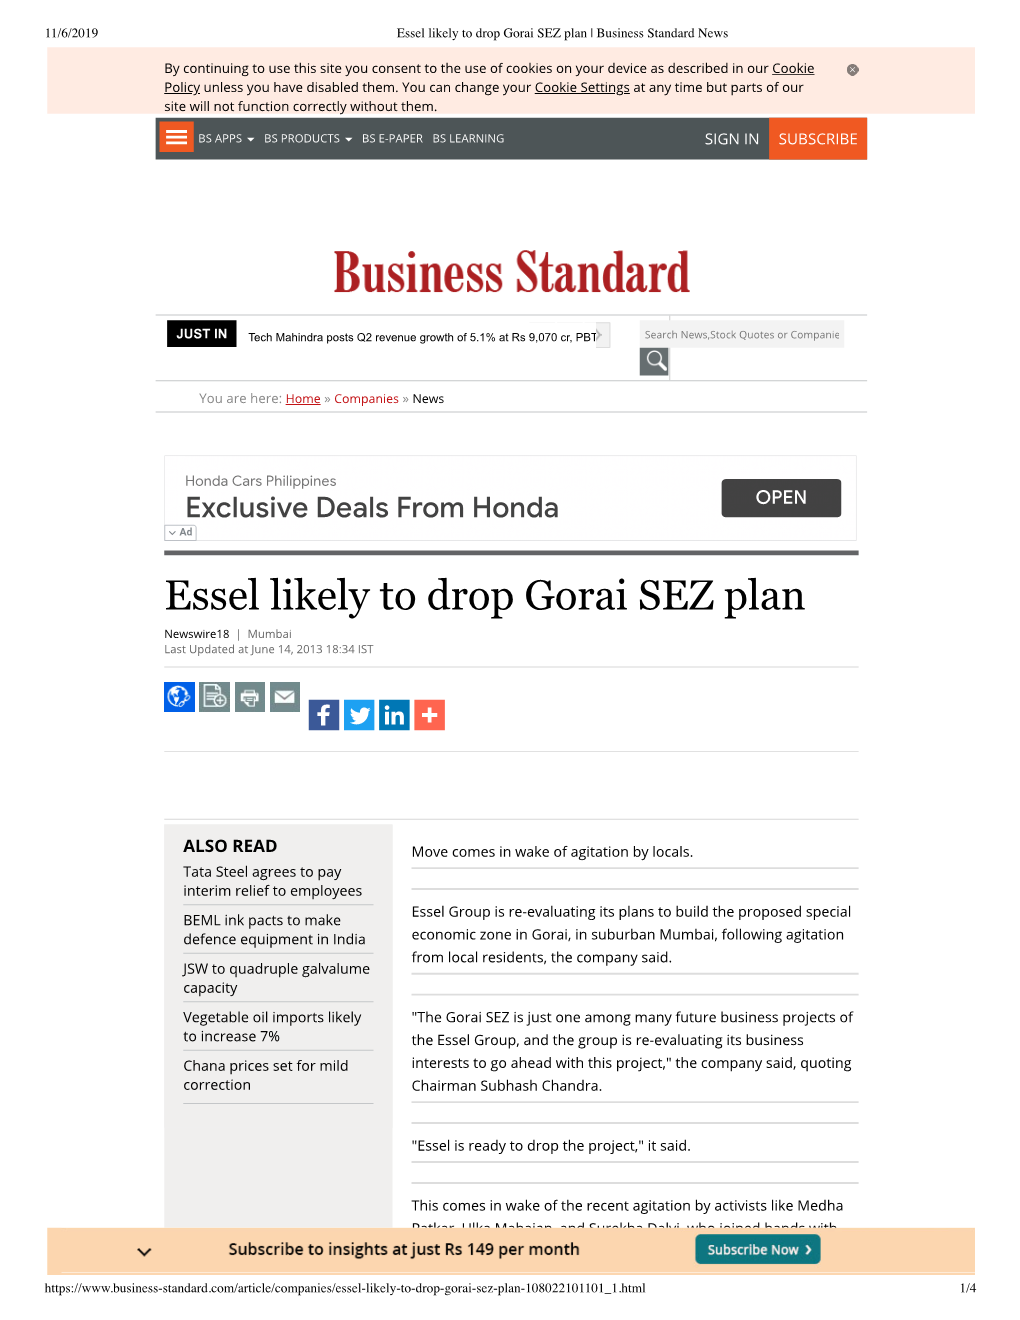 Essel Likely to Drop Gorai SEZ Plan | Business Standard News